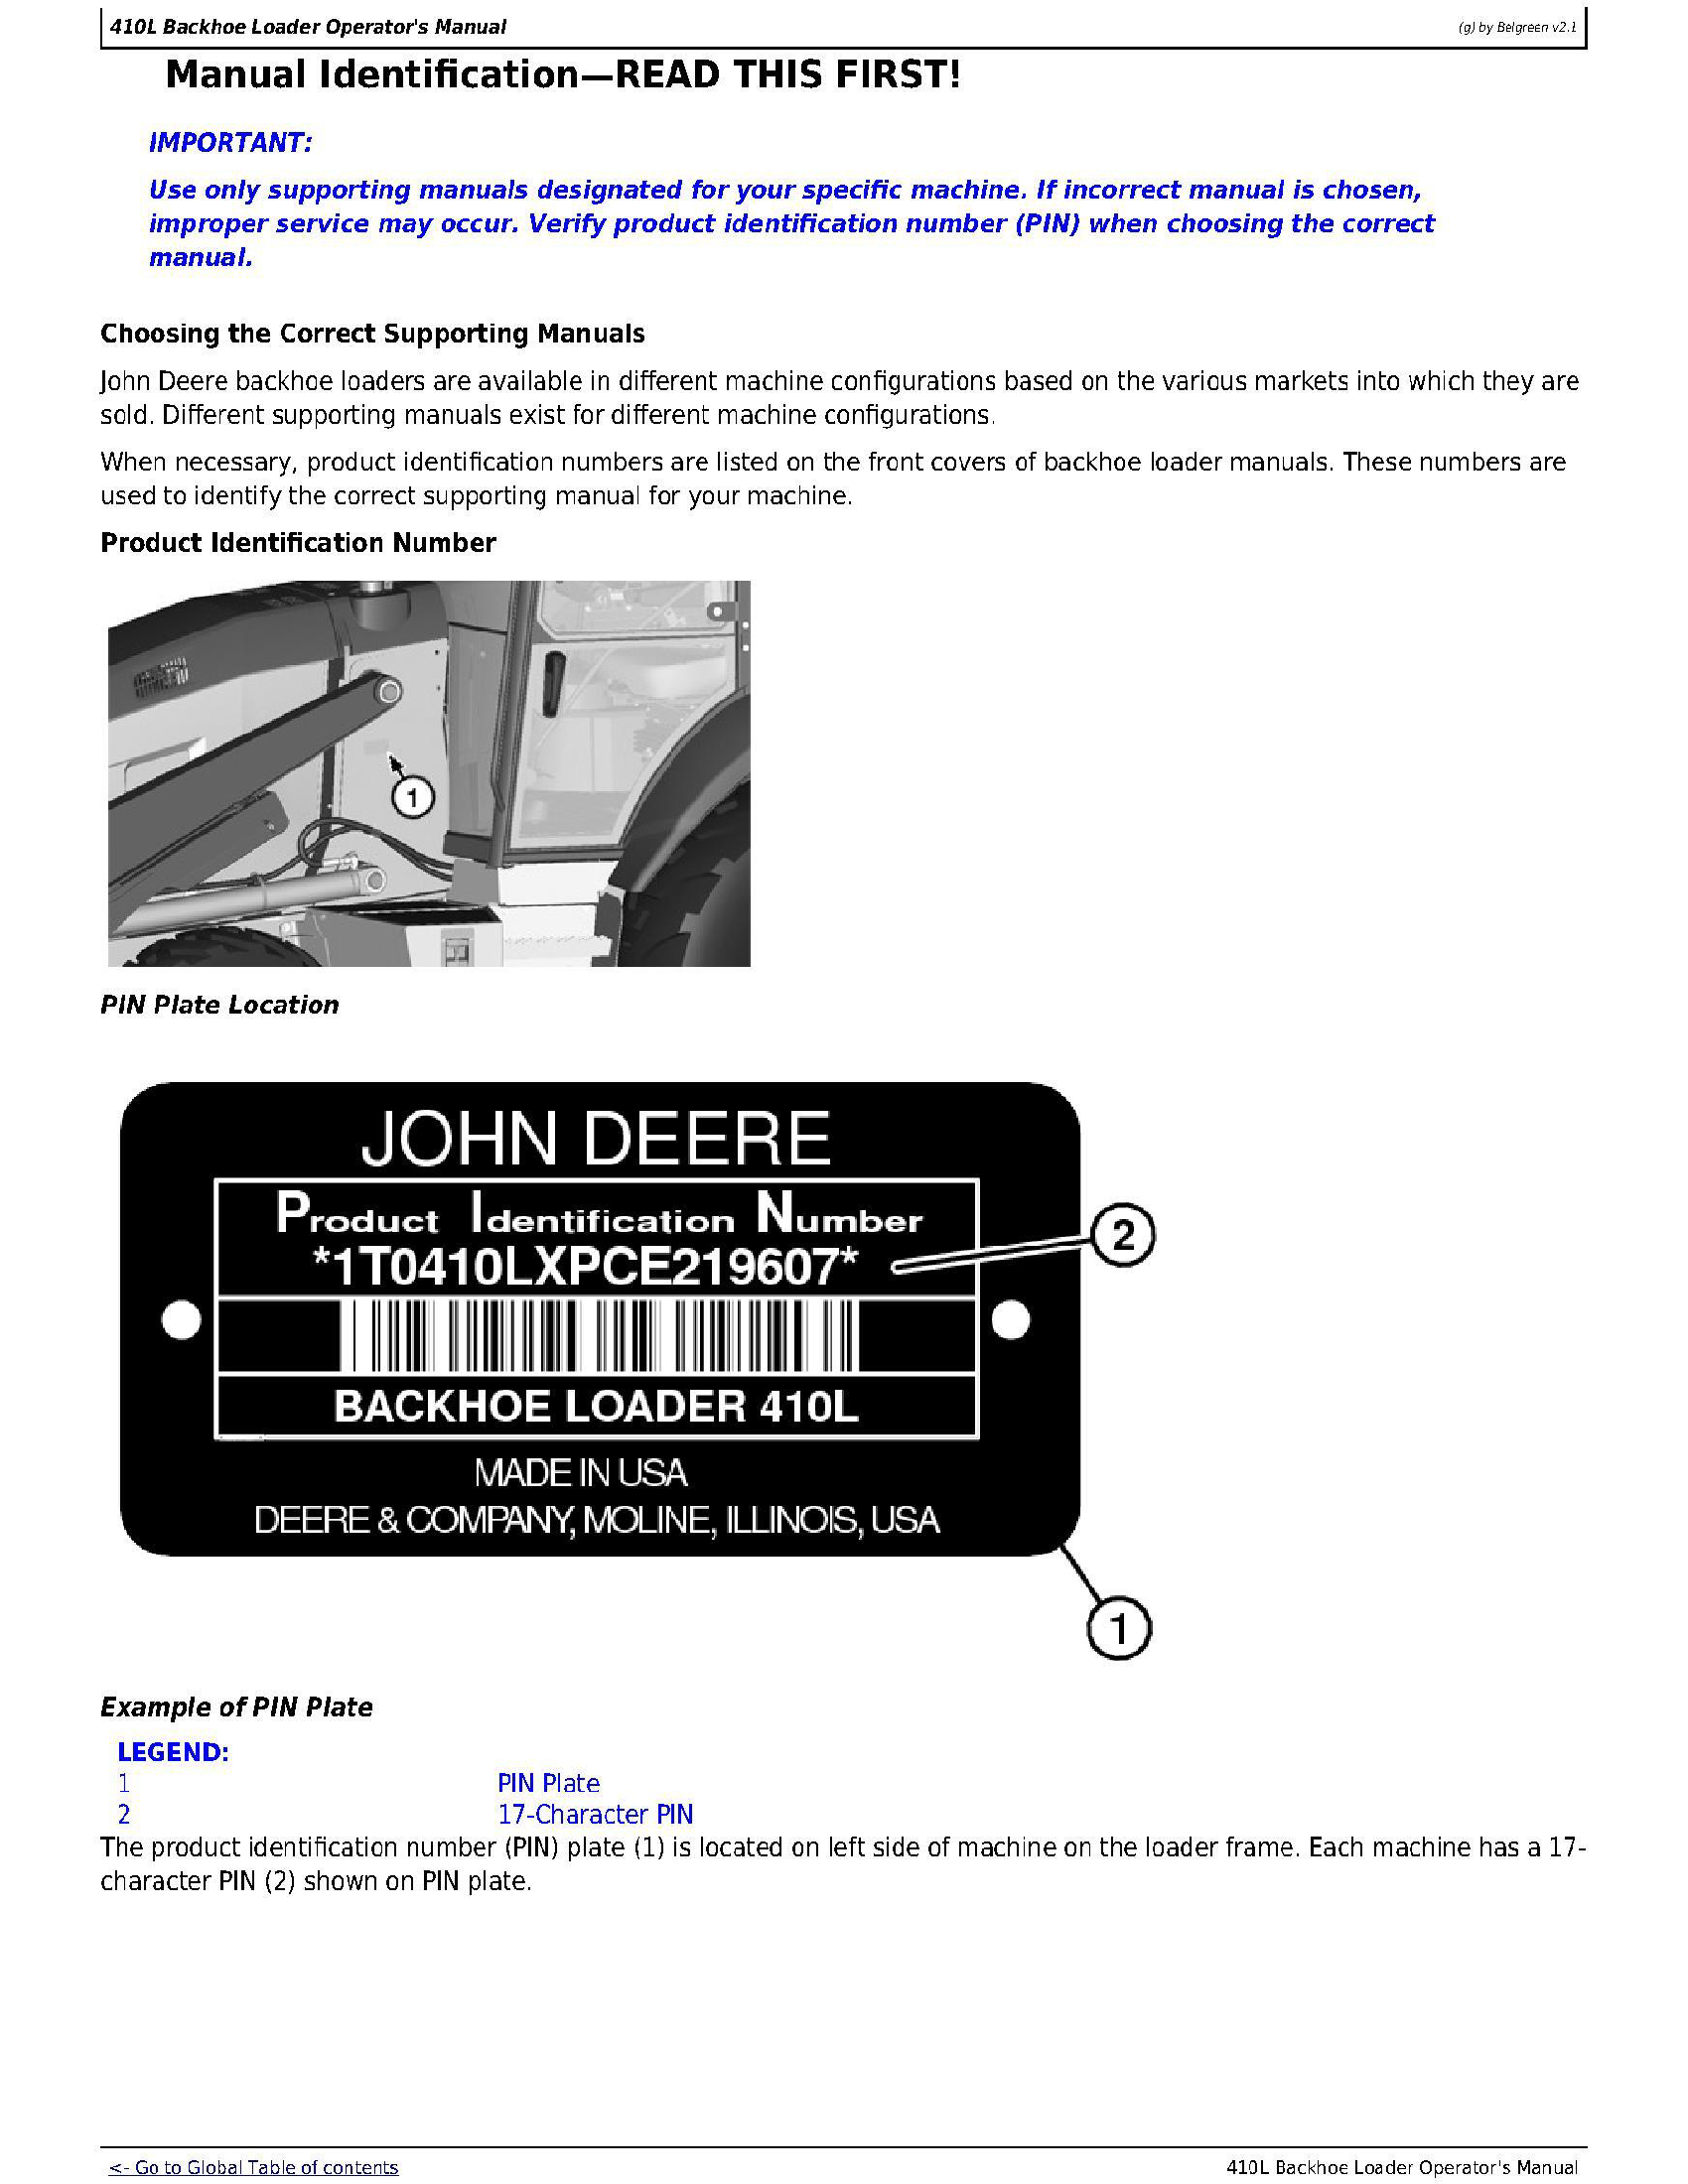 John Deere 1T0410LX**D273920- manual pdf